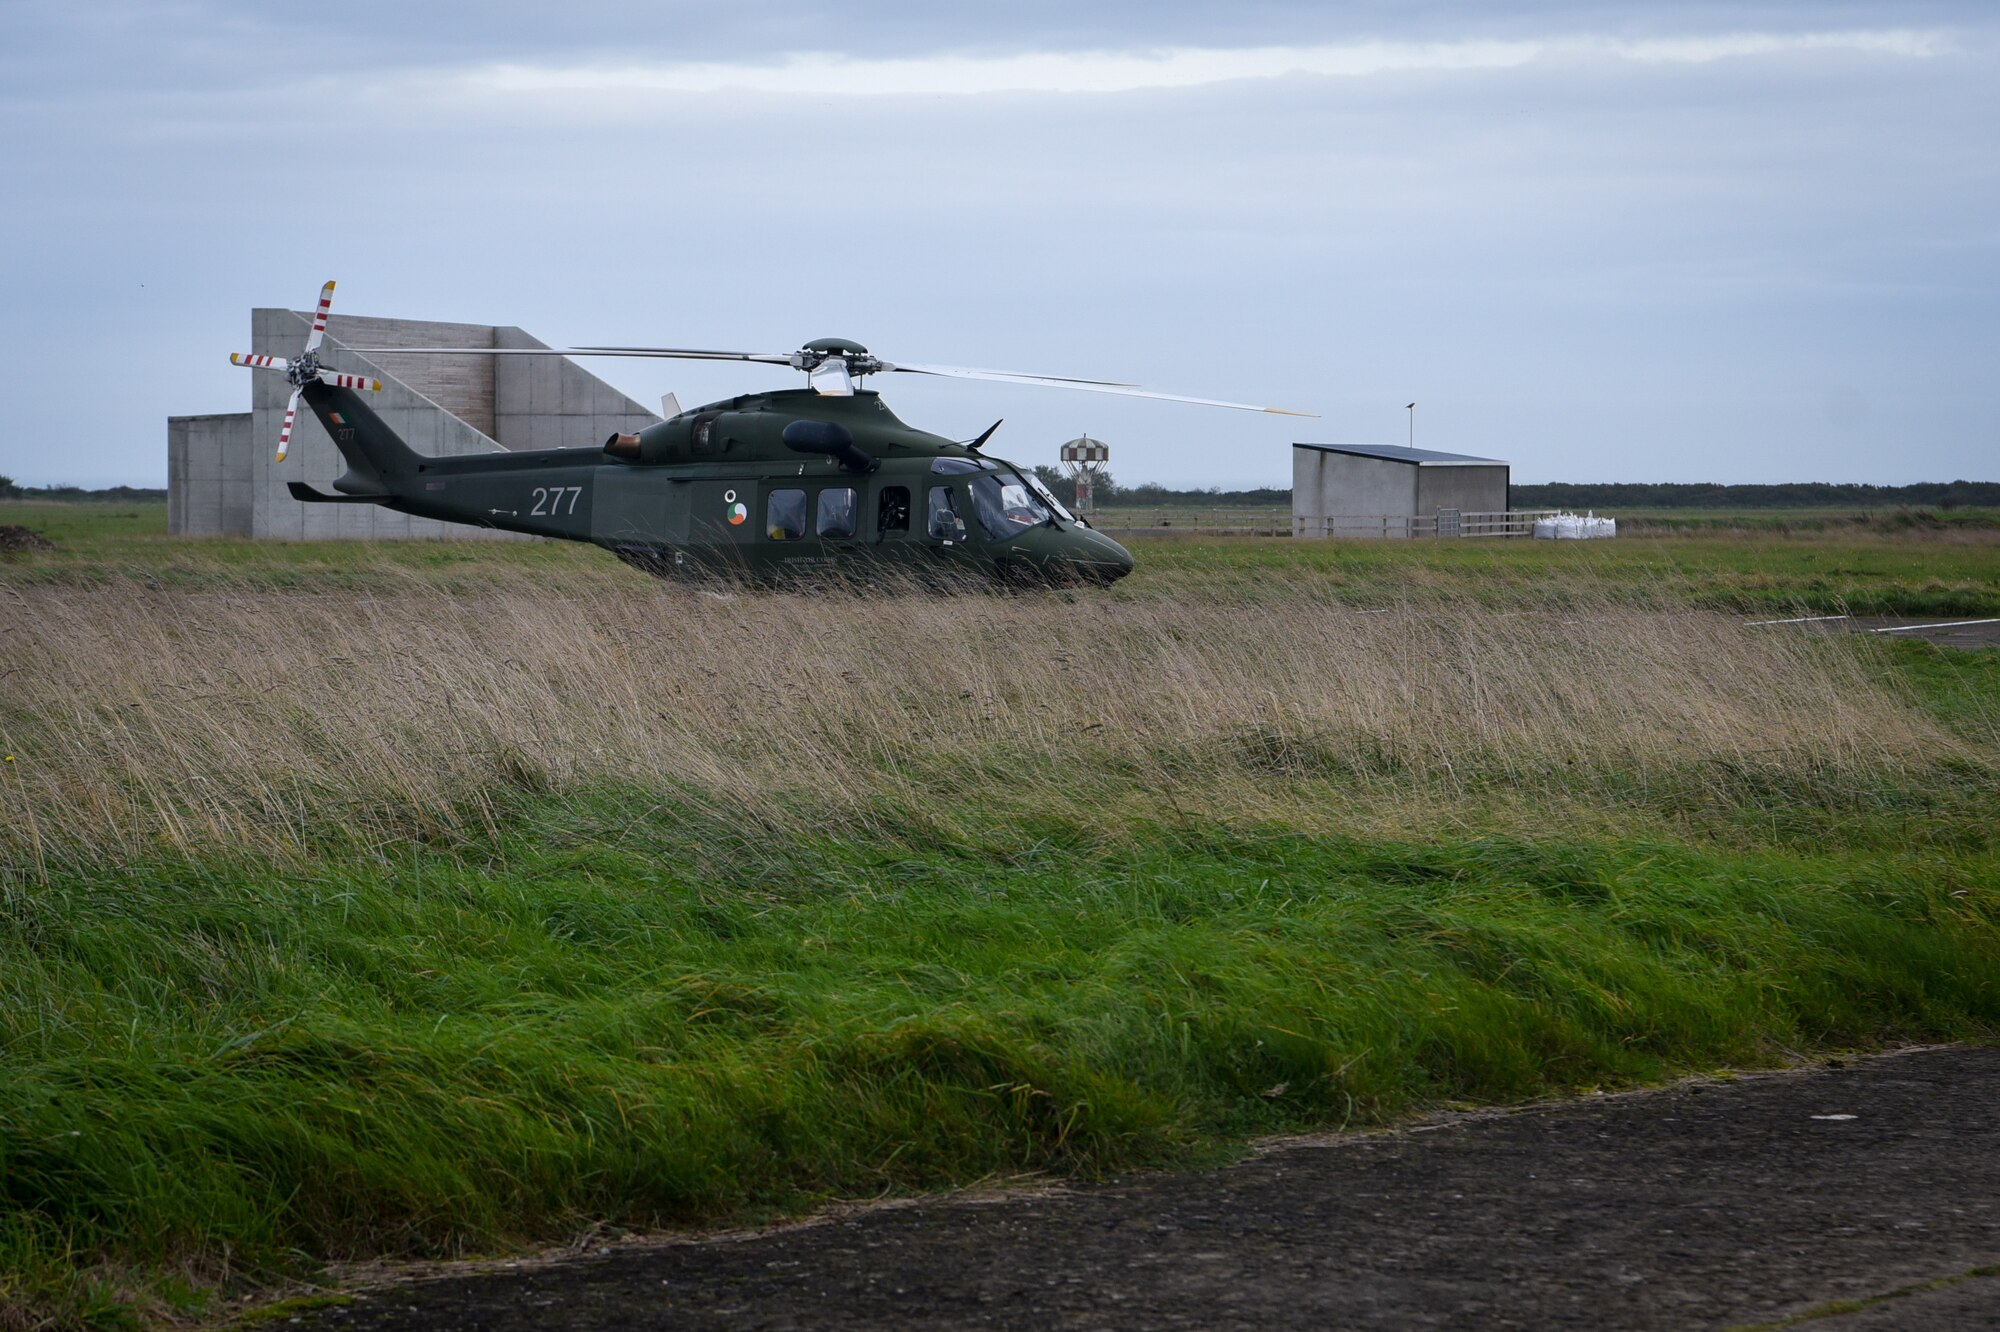 AW139 in field